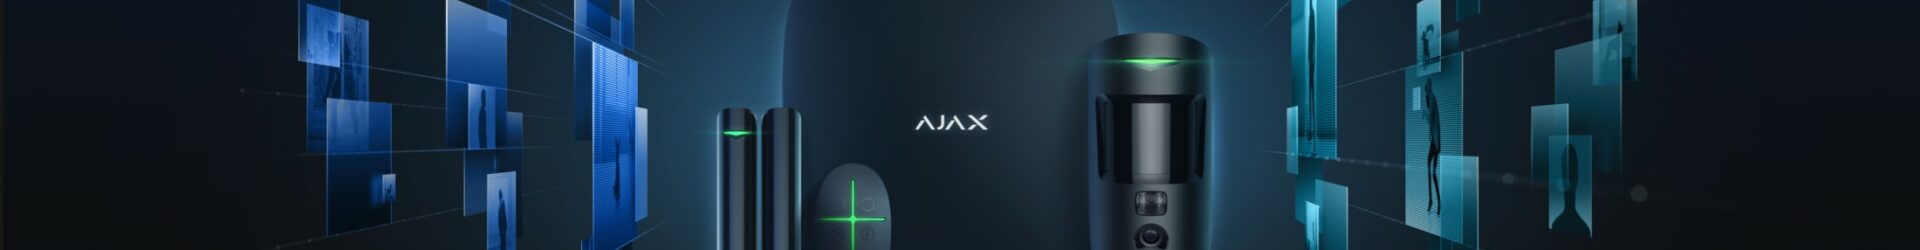 Ajax Systems – Alarme anti intrusion sans fil